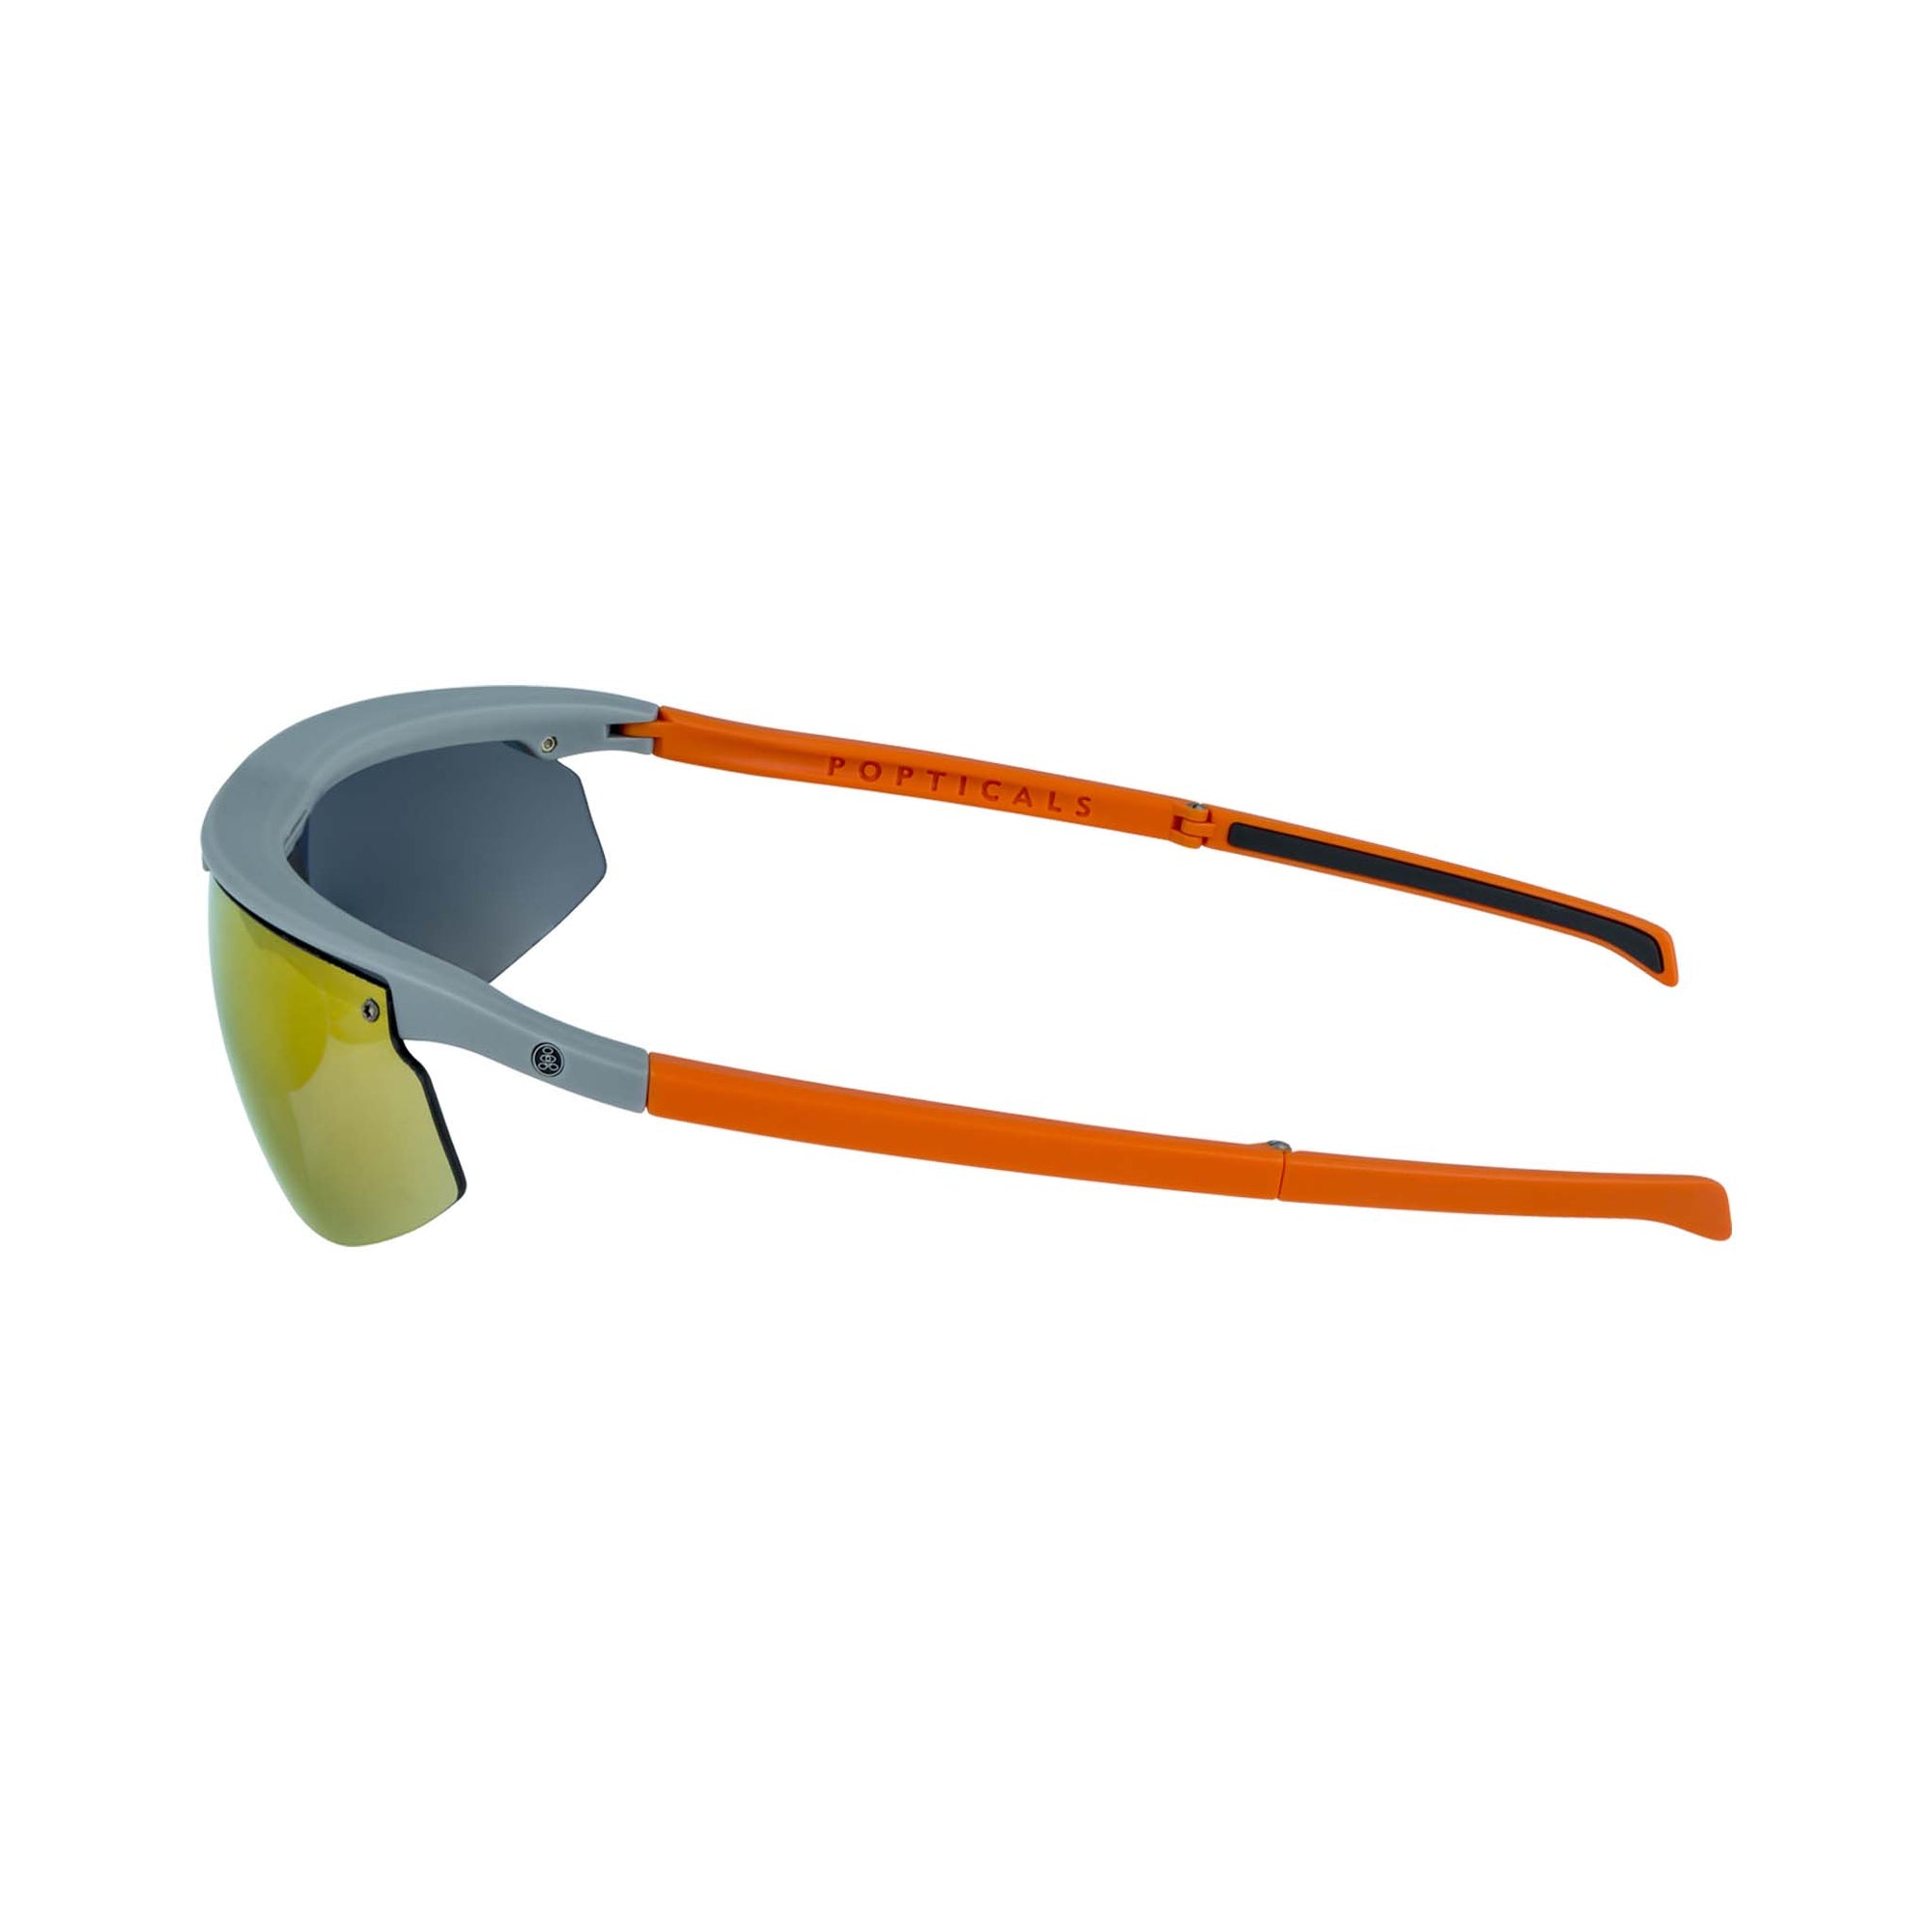 Popticals, Premium Compact Sunglasses, PopStar, 010040-OMGP, Polarized Sunglasses, Matte Gray/Orange Frame, Gray Lenses w/Orange Mirror Finish, Side View